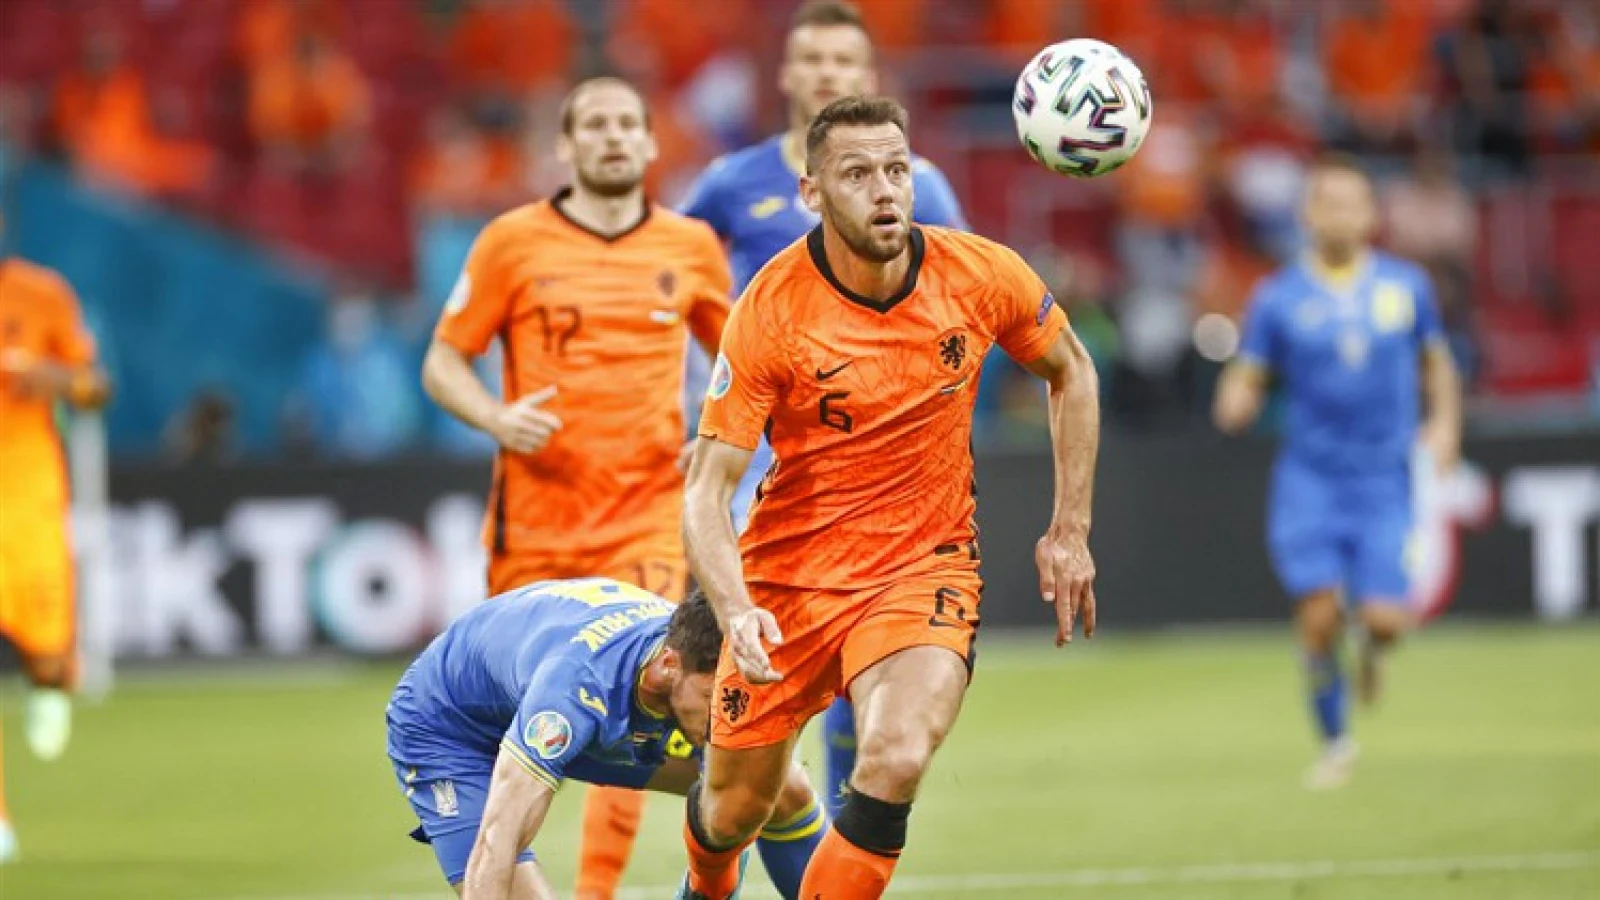 LIVE | Nederland - Oostenrijk 2-0 | Einde wedstrijd